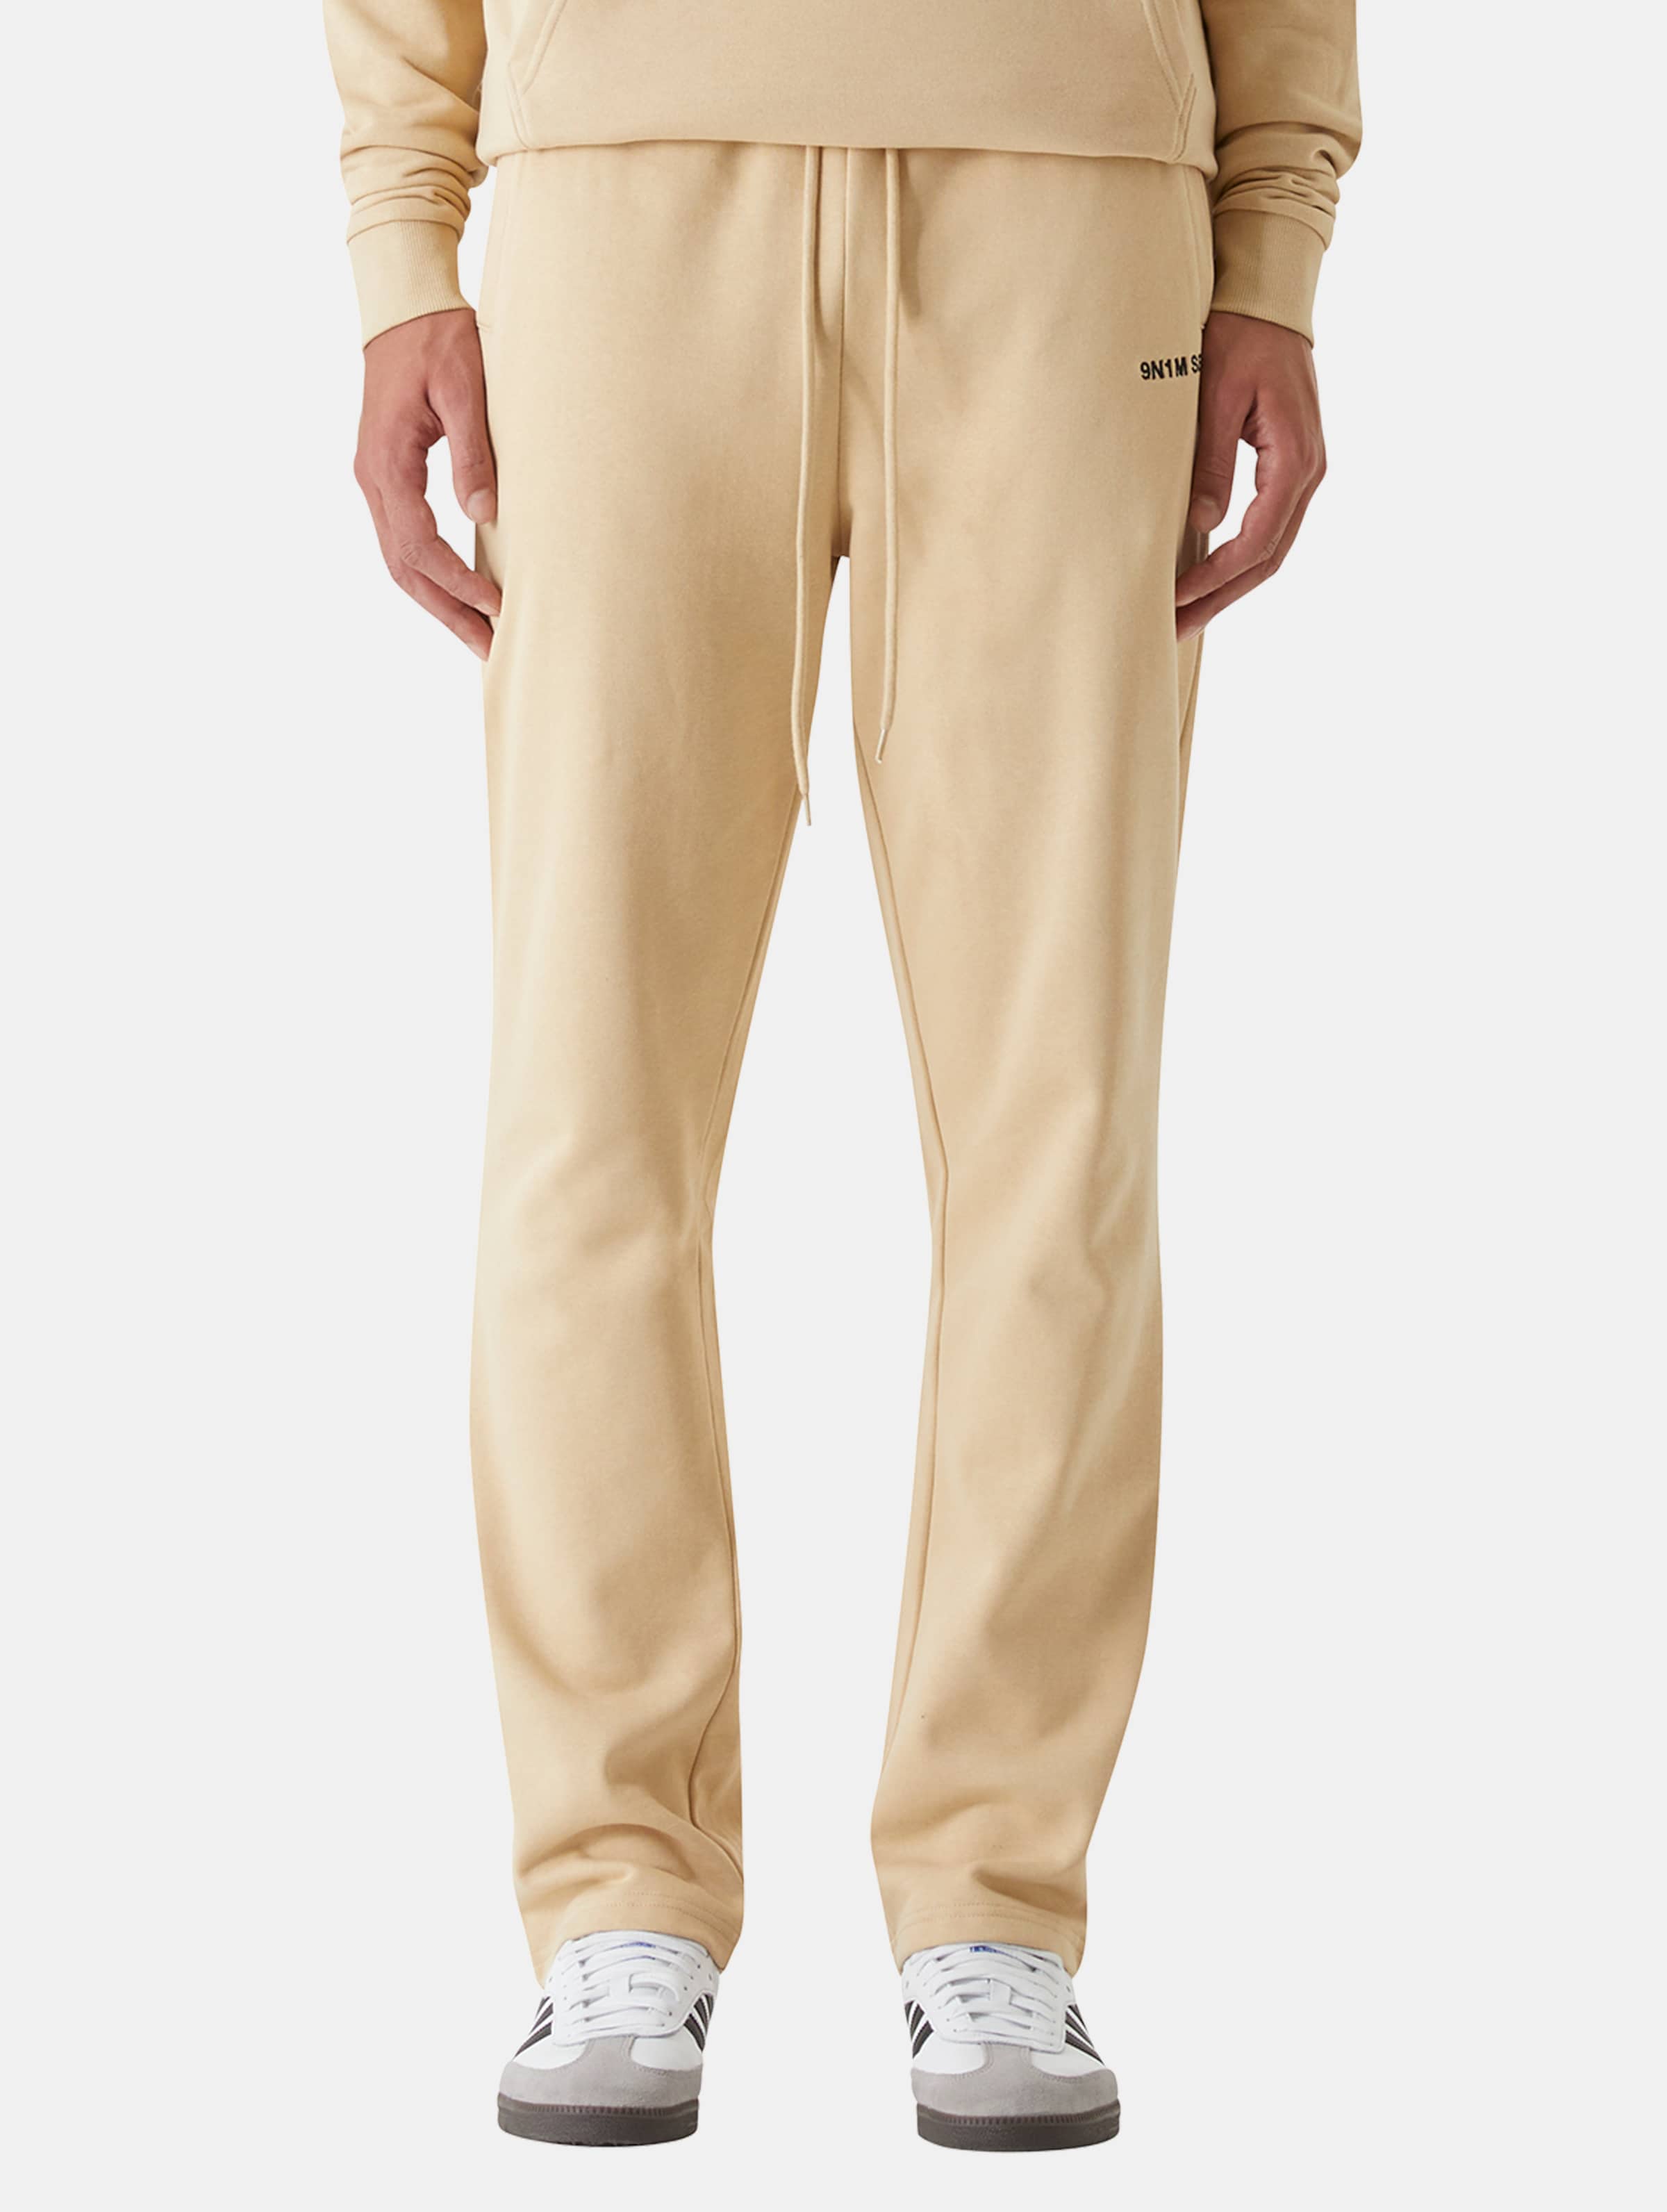 9N1M SENSE Essential Straight Jogginghosen Männer,Unisex op kleur beige, Maat XL